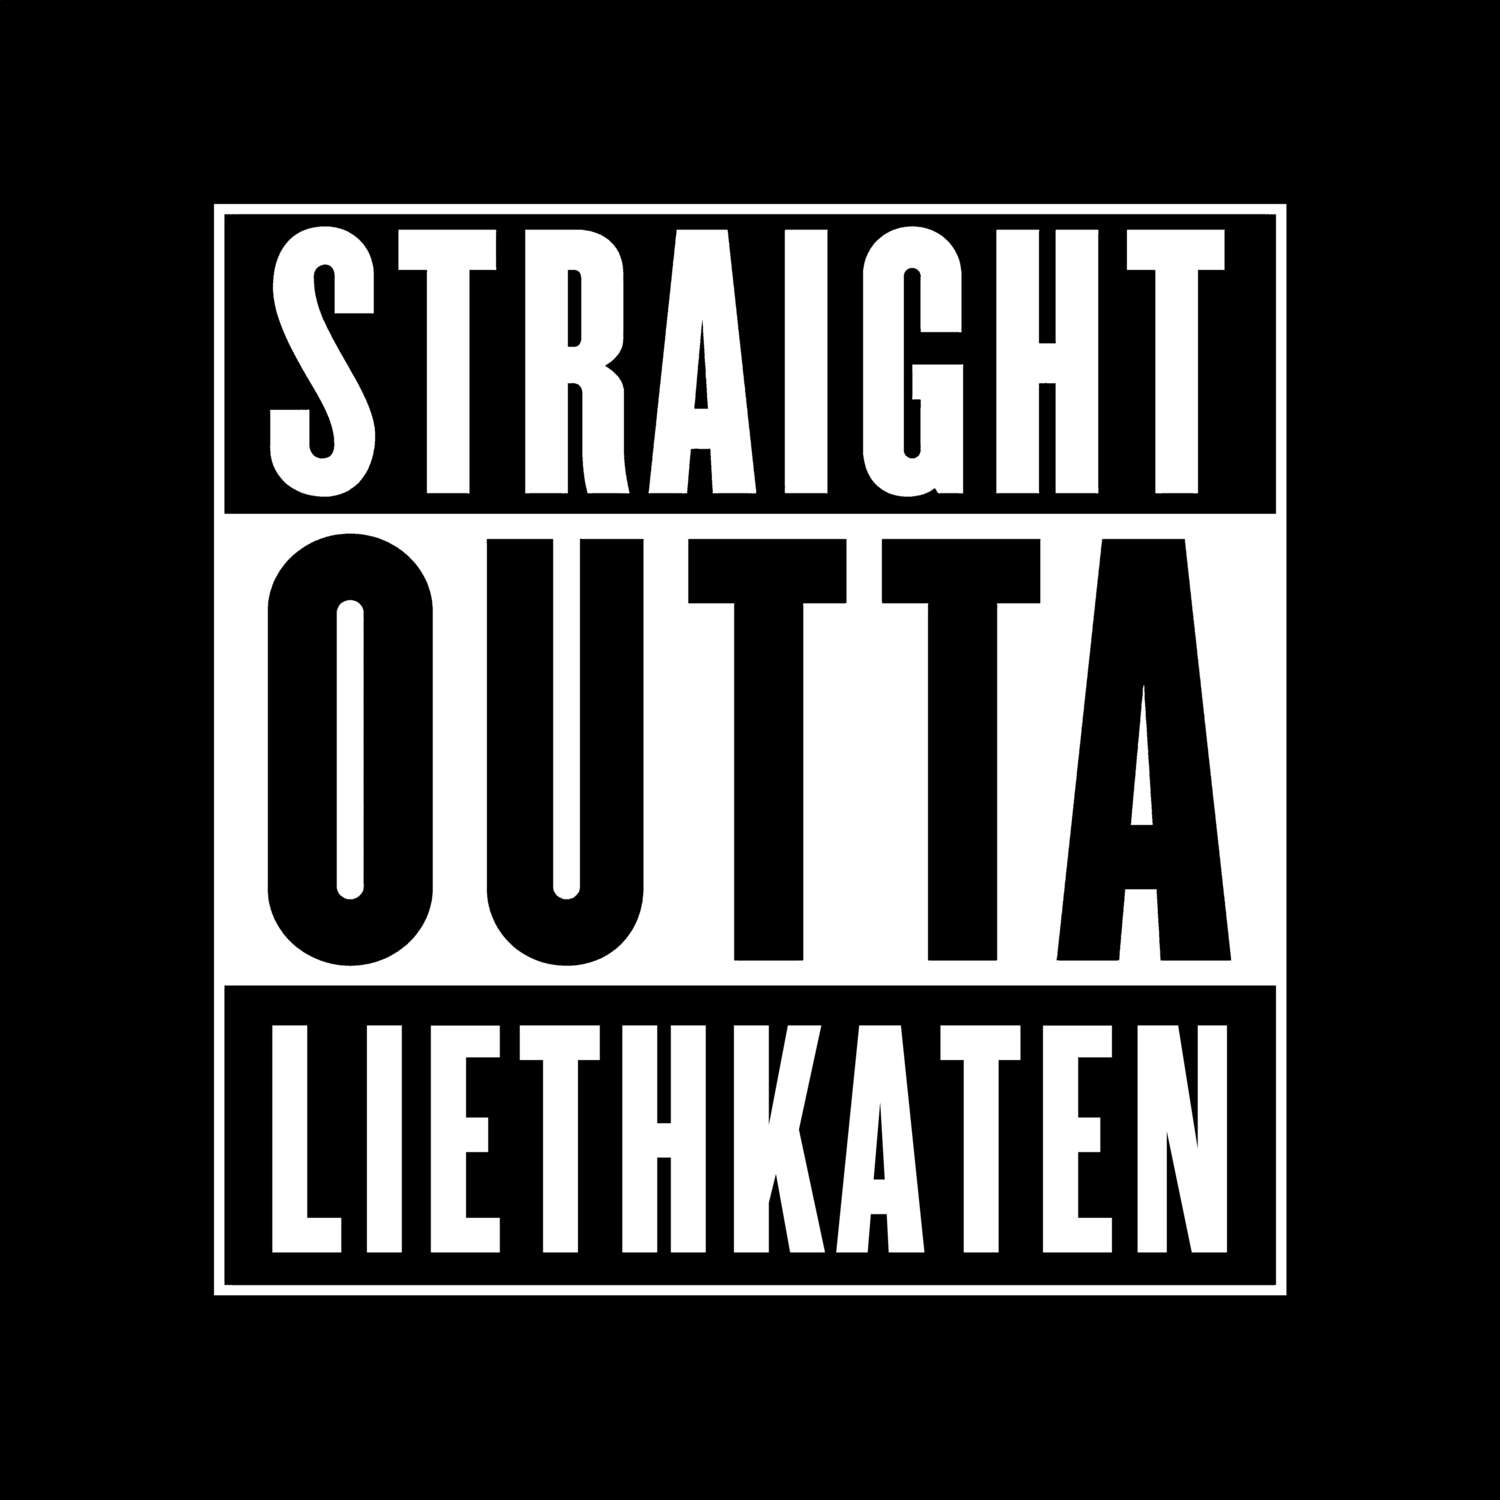 Liethkaten T-Shirt »Straight Outta«